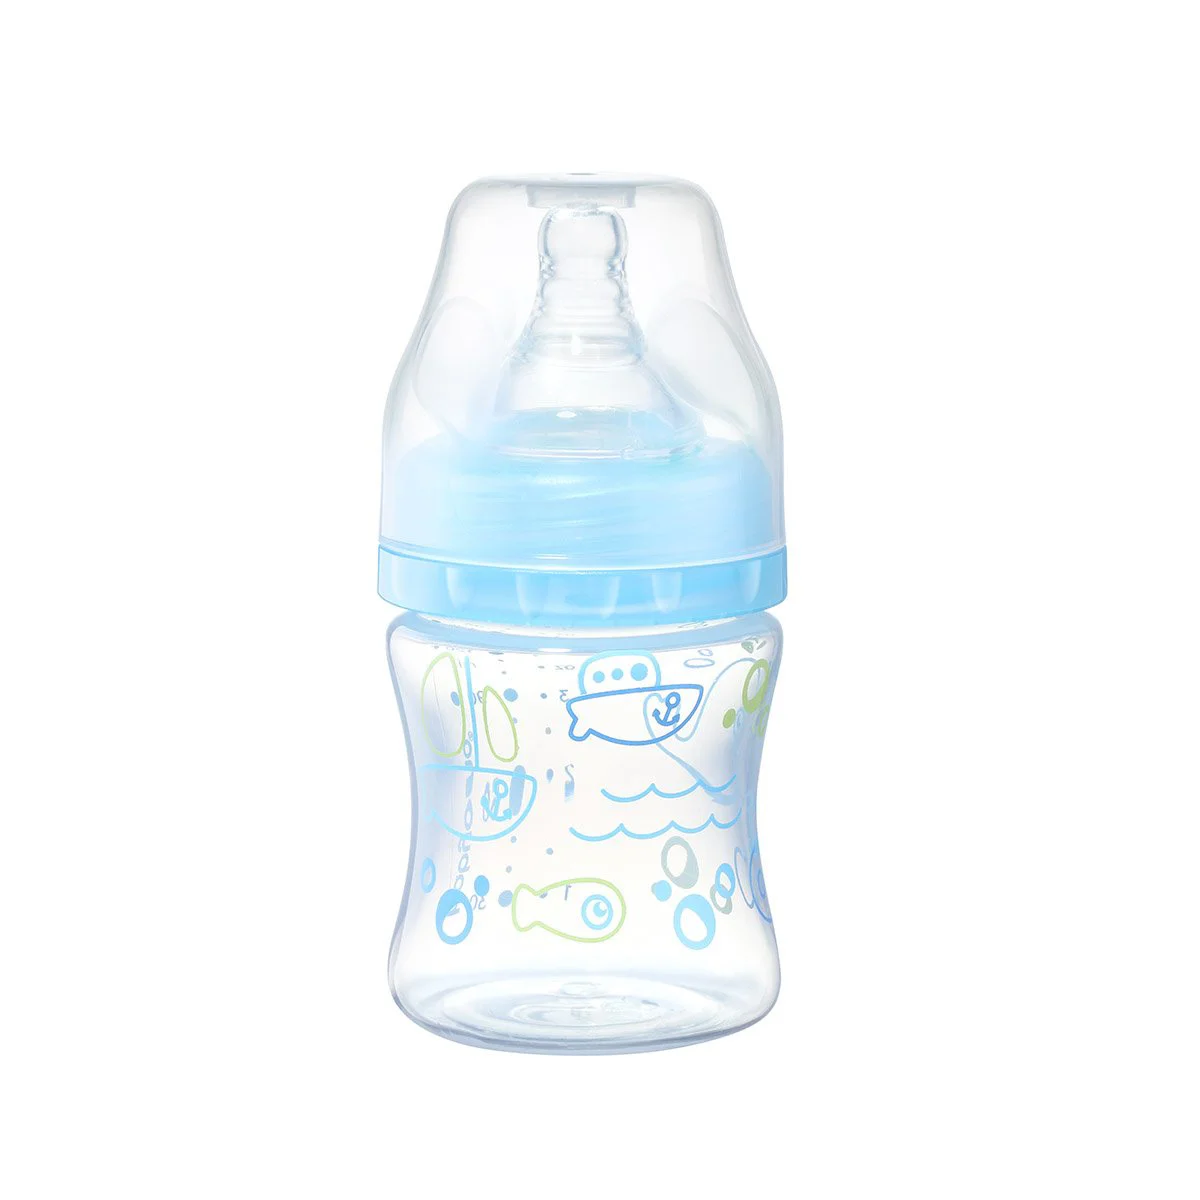 Антиколиковая бутылкас широким горлышком BabyOno, 120 мл